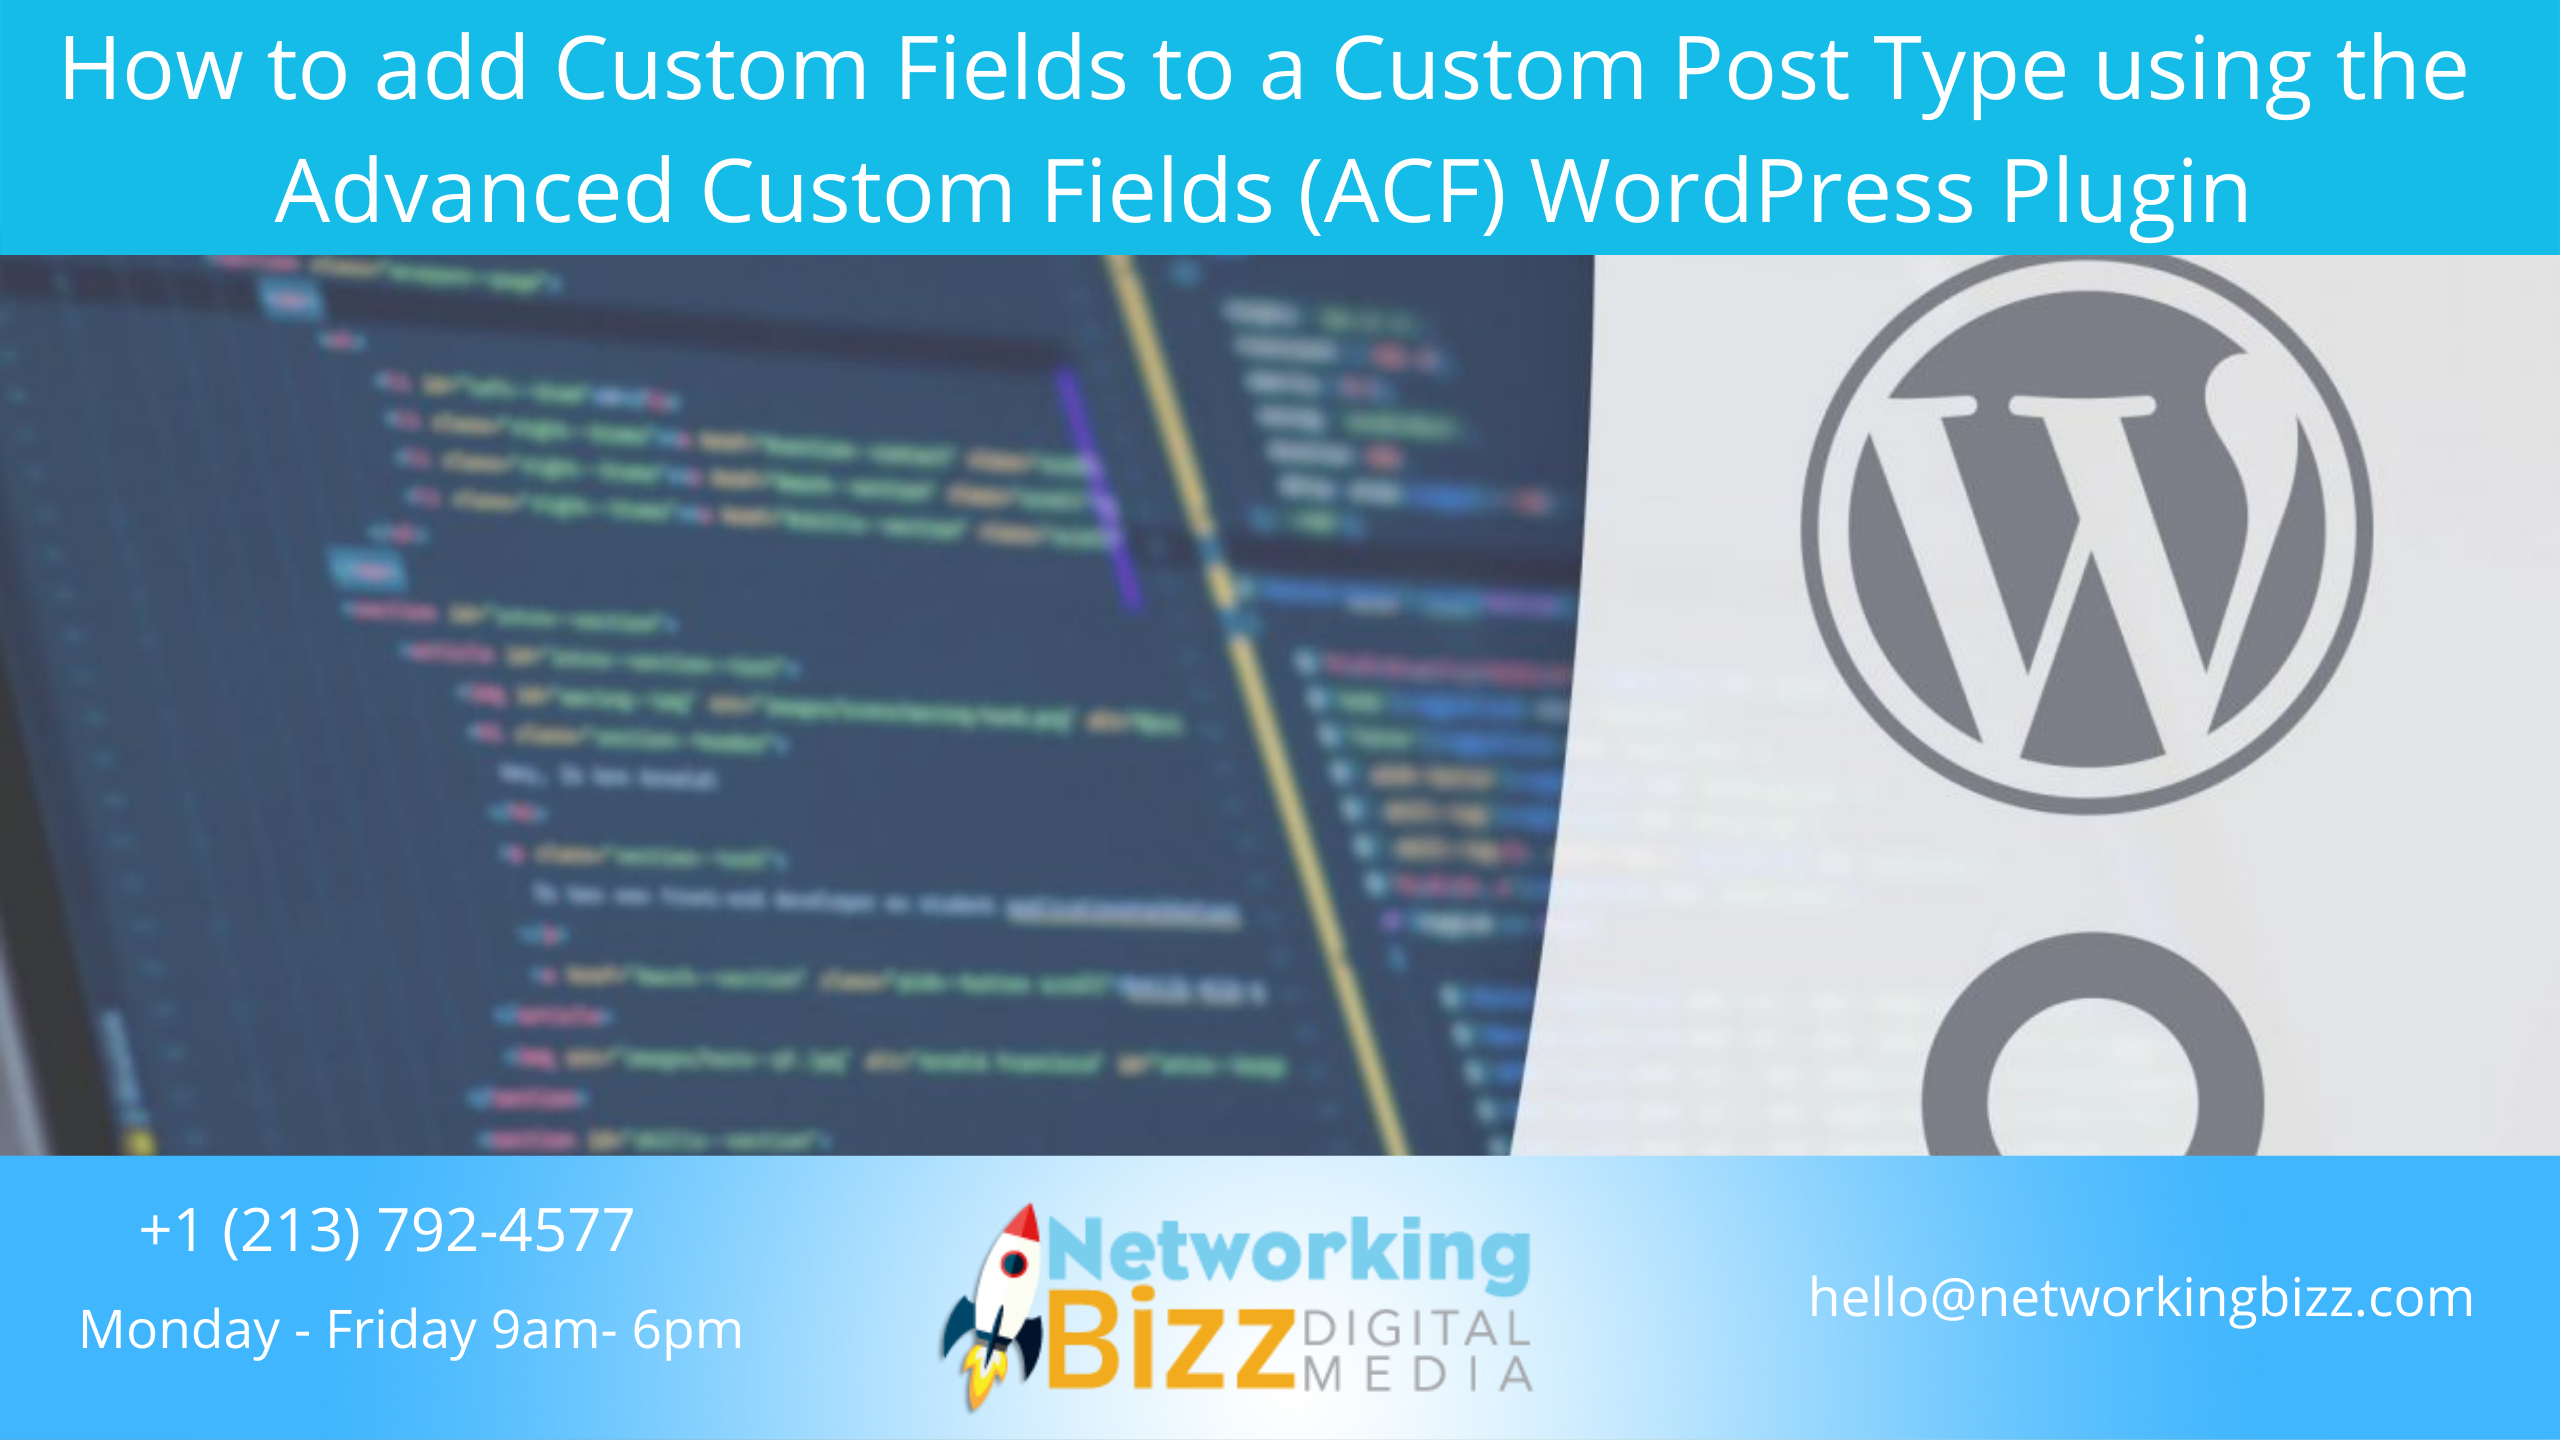 How to add Custom Fields to a Custom Post Type using the Advanced Custom Fields (ACF) WordPress Plugin